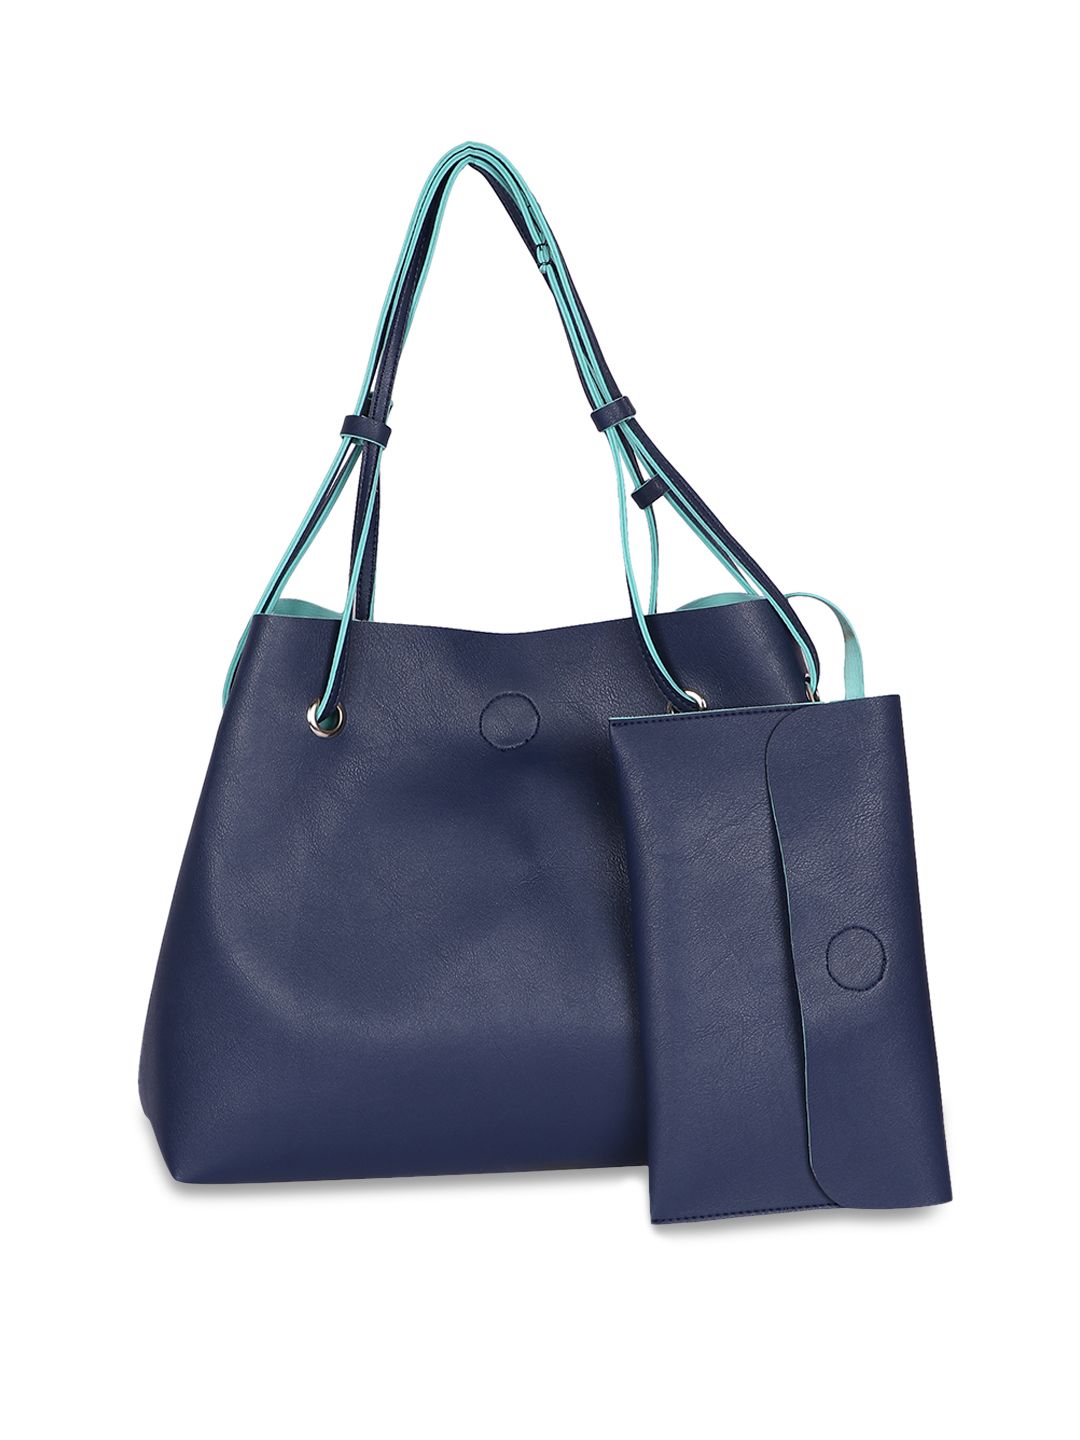 OsaiZ Blue Solid Tote Bag Price in India